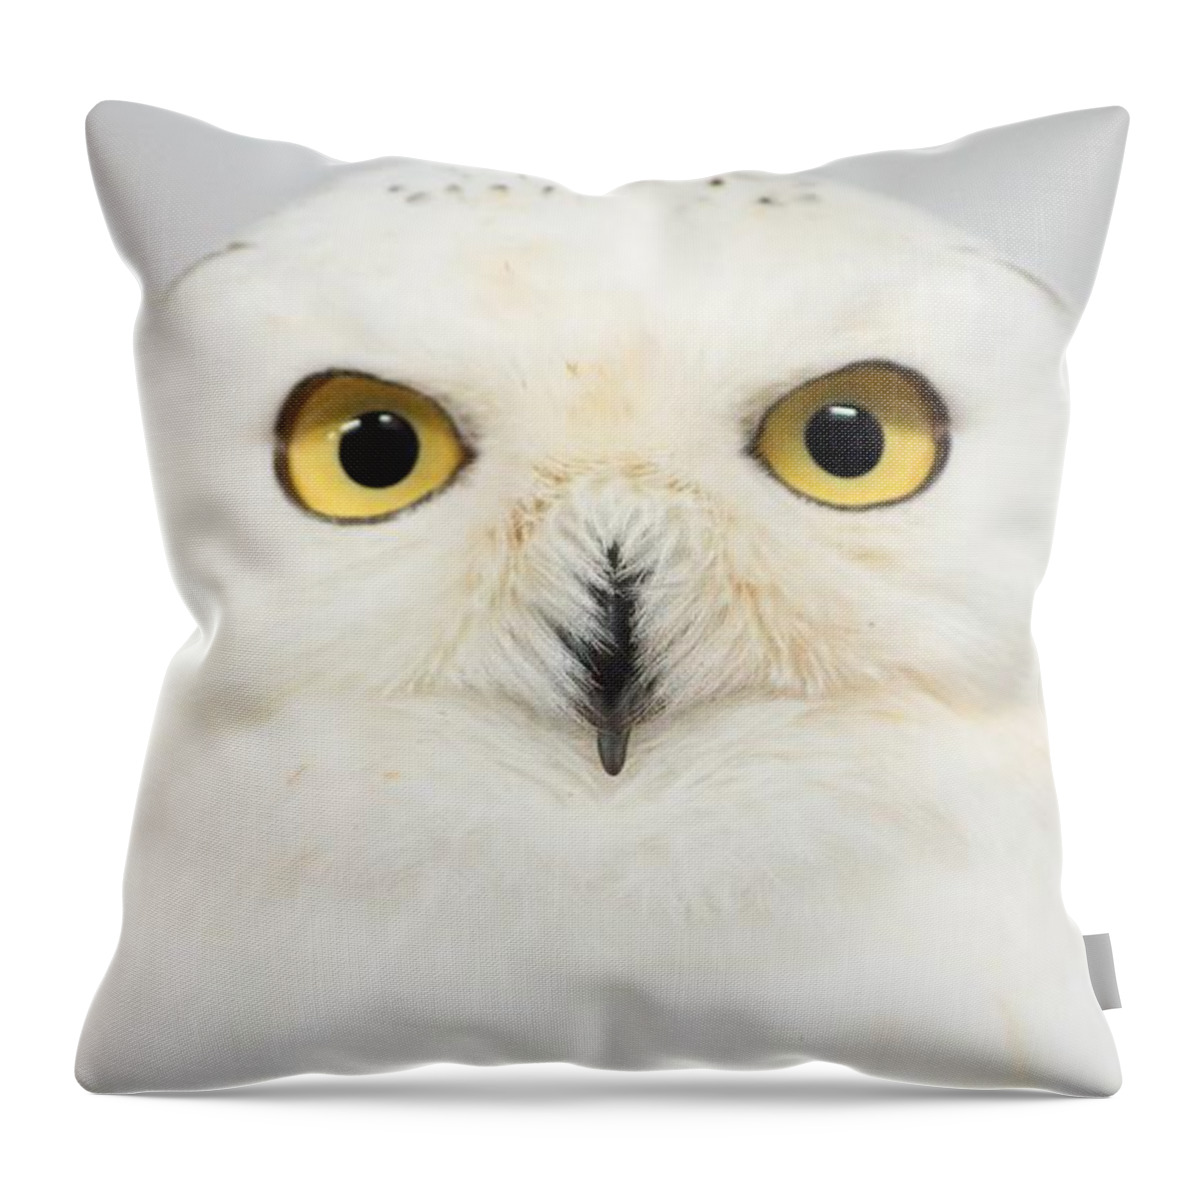 Kobe Animal Kingdom Throw Pillow featuring the photograph Owl #5 by Takaaki Yoshikawa